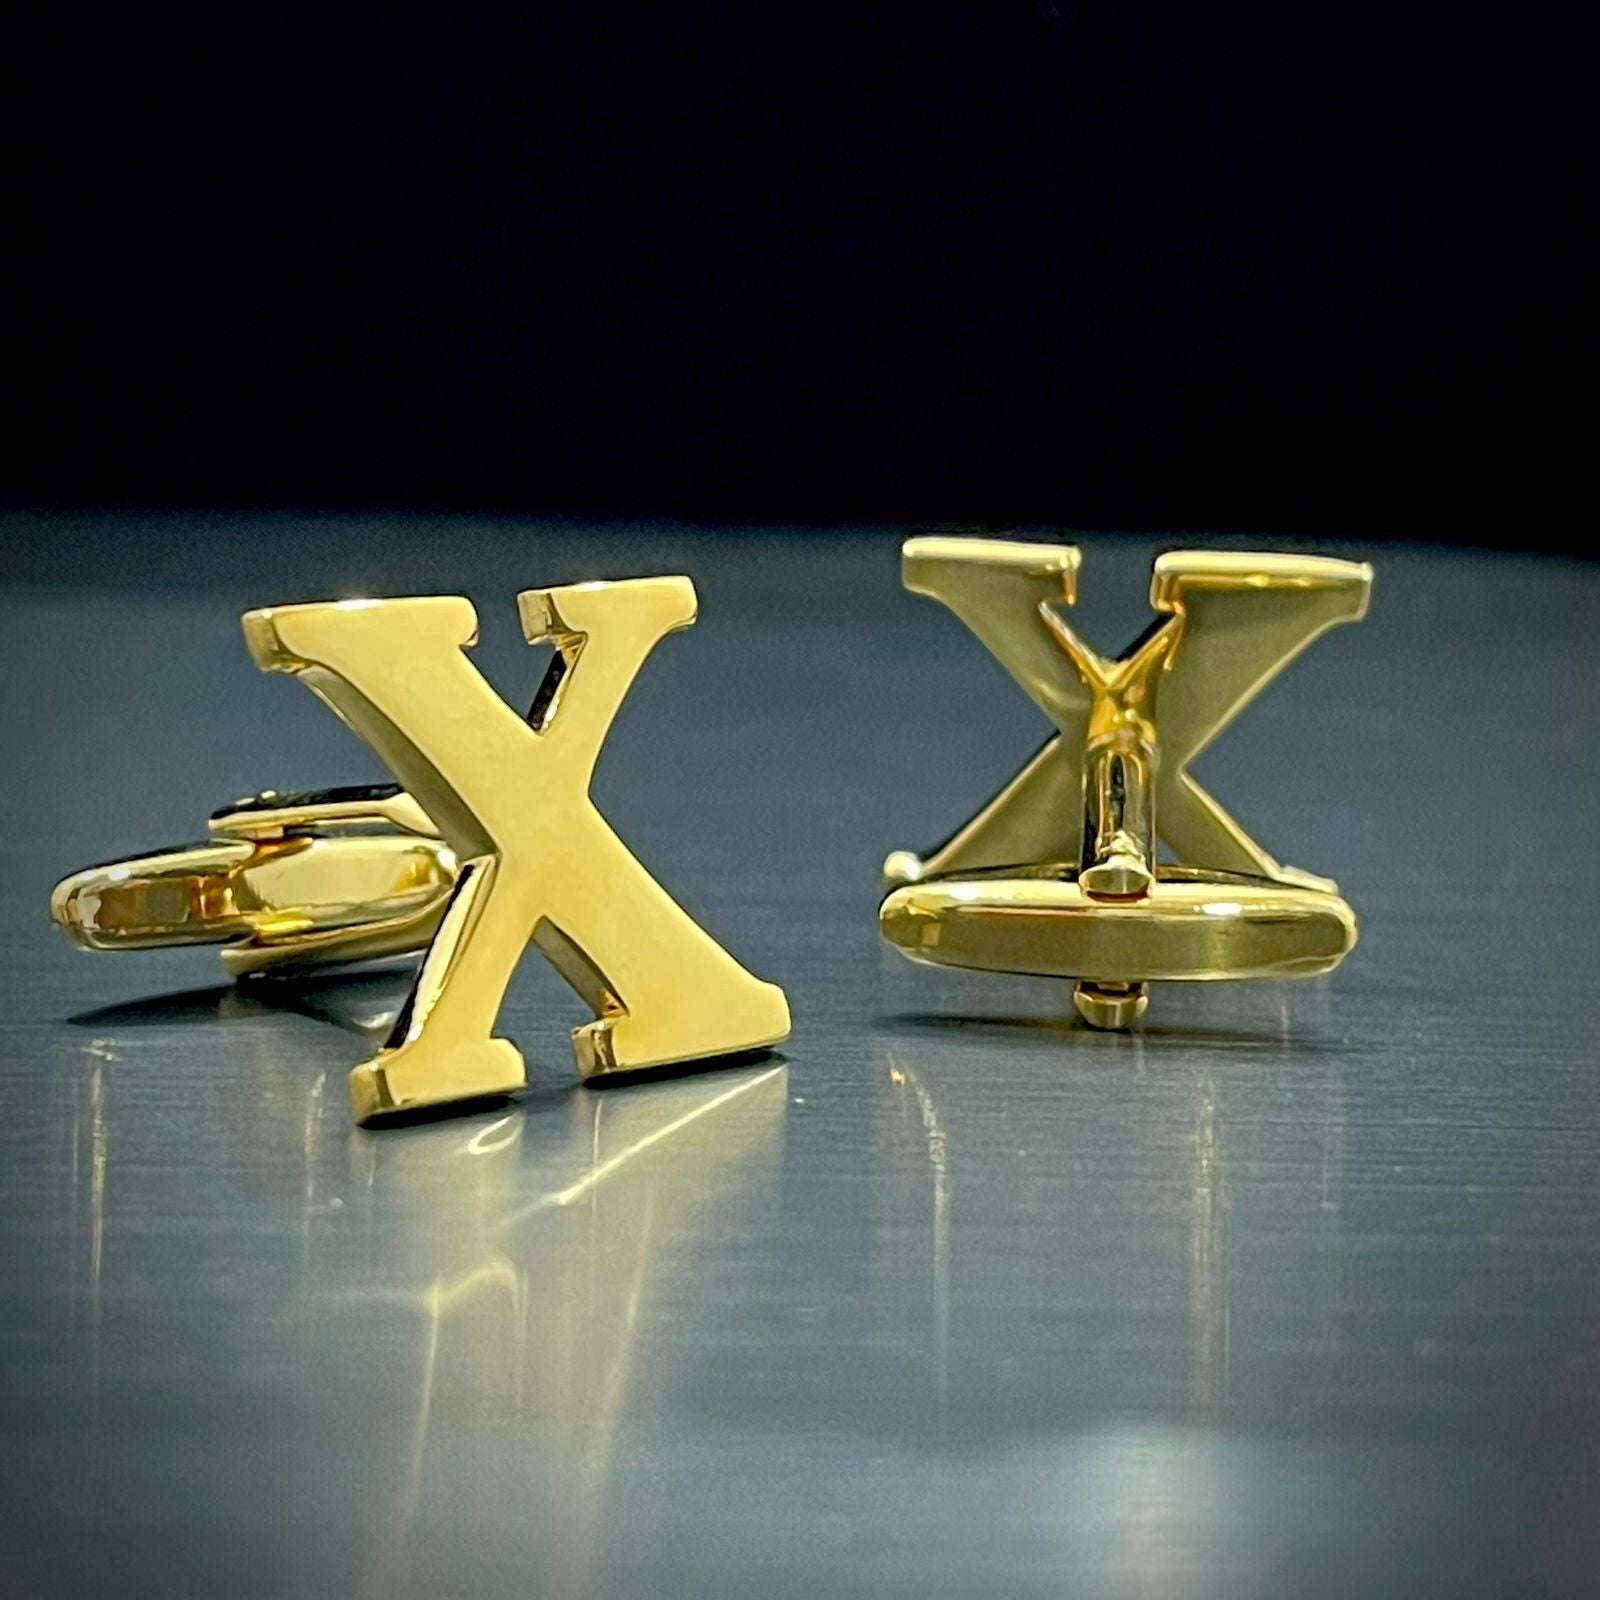 X Letter Alphabet Name Initial Golden Cufflinks For Men Online In Pakistan